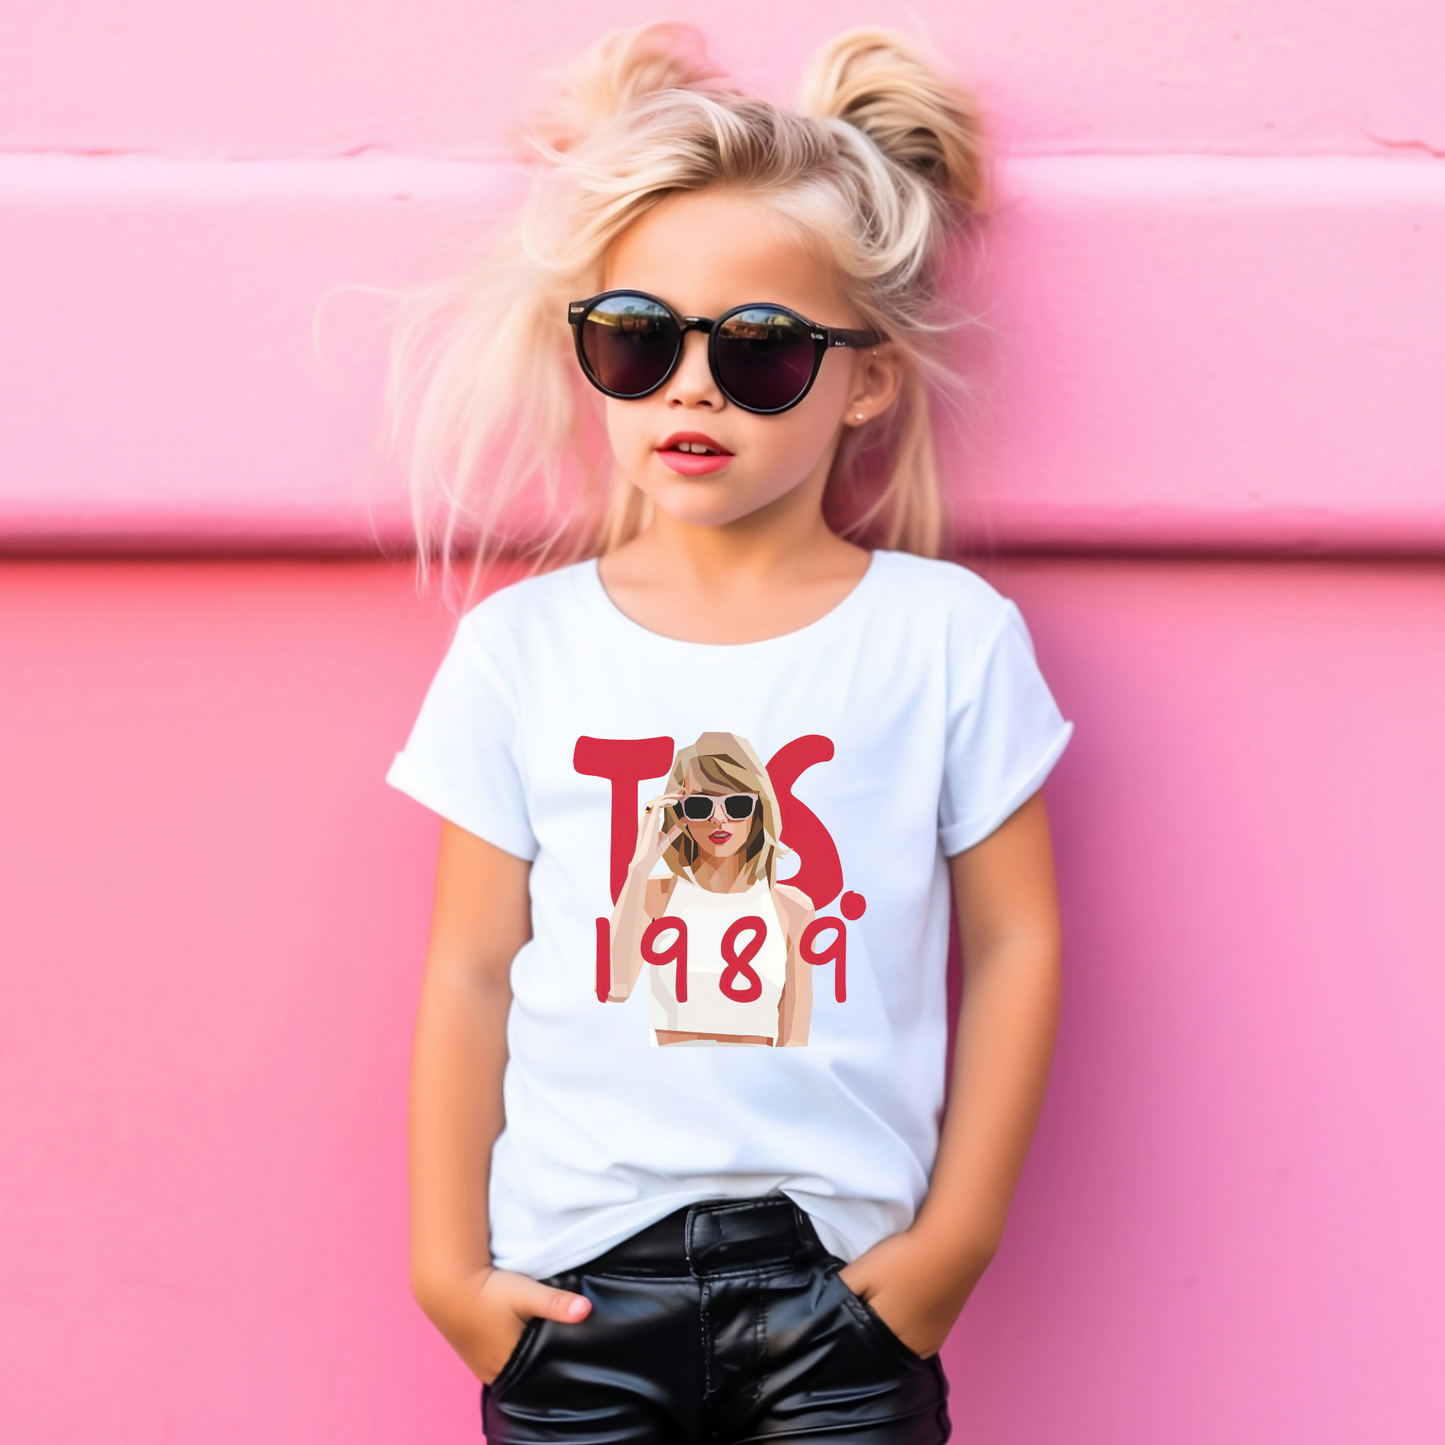 T Swift inspired t-shirt | Kids t-shirt | 1989